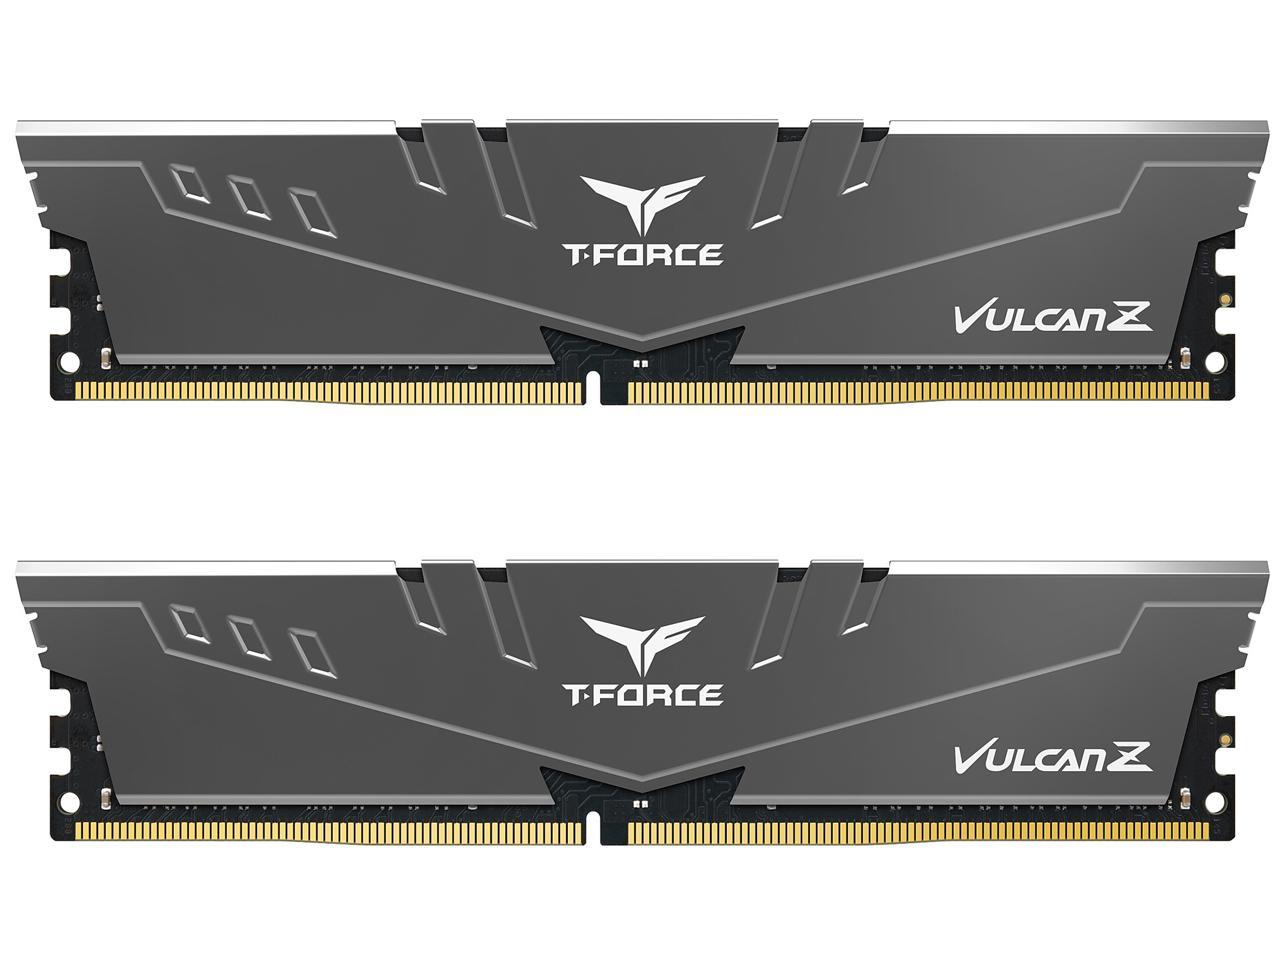 32GB (2x 16) Team T-FORCE VULCAN Z DDR4 3200 Desktop RAM kit $100